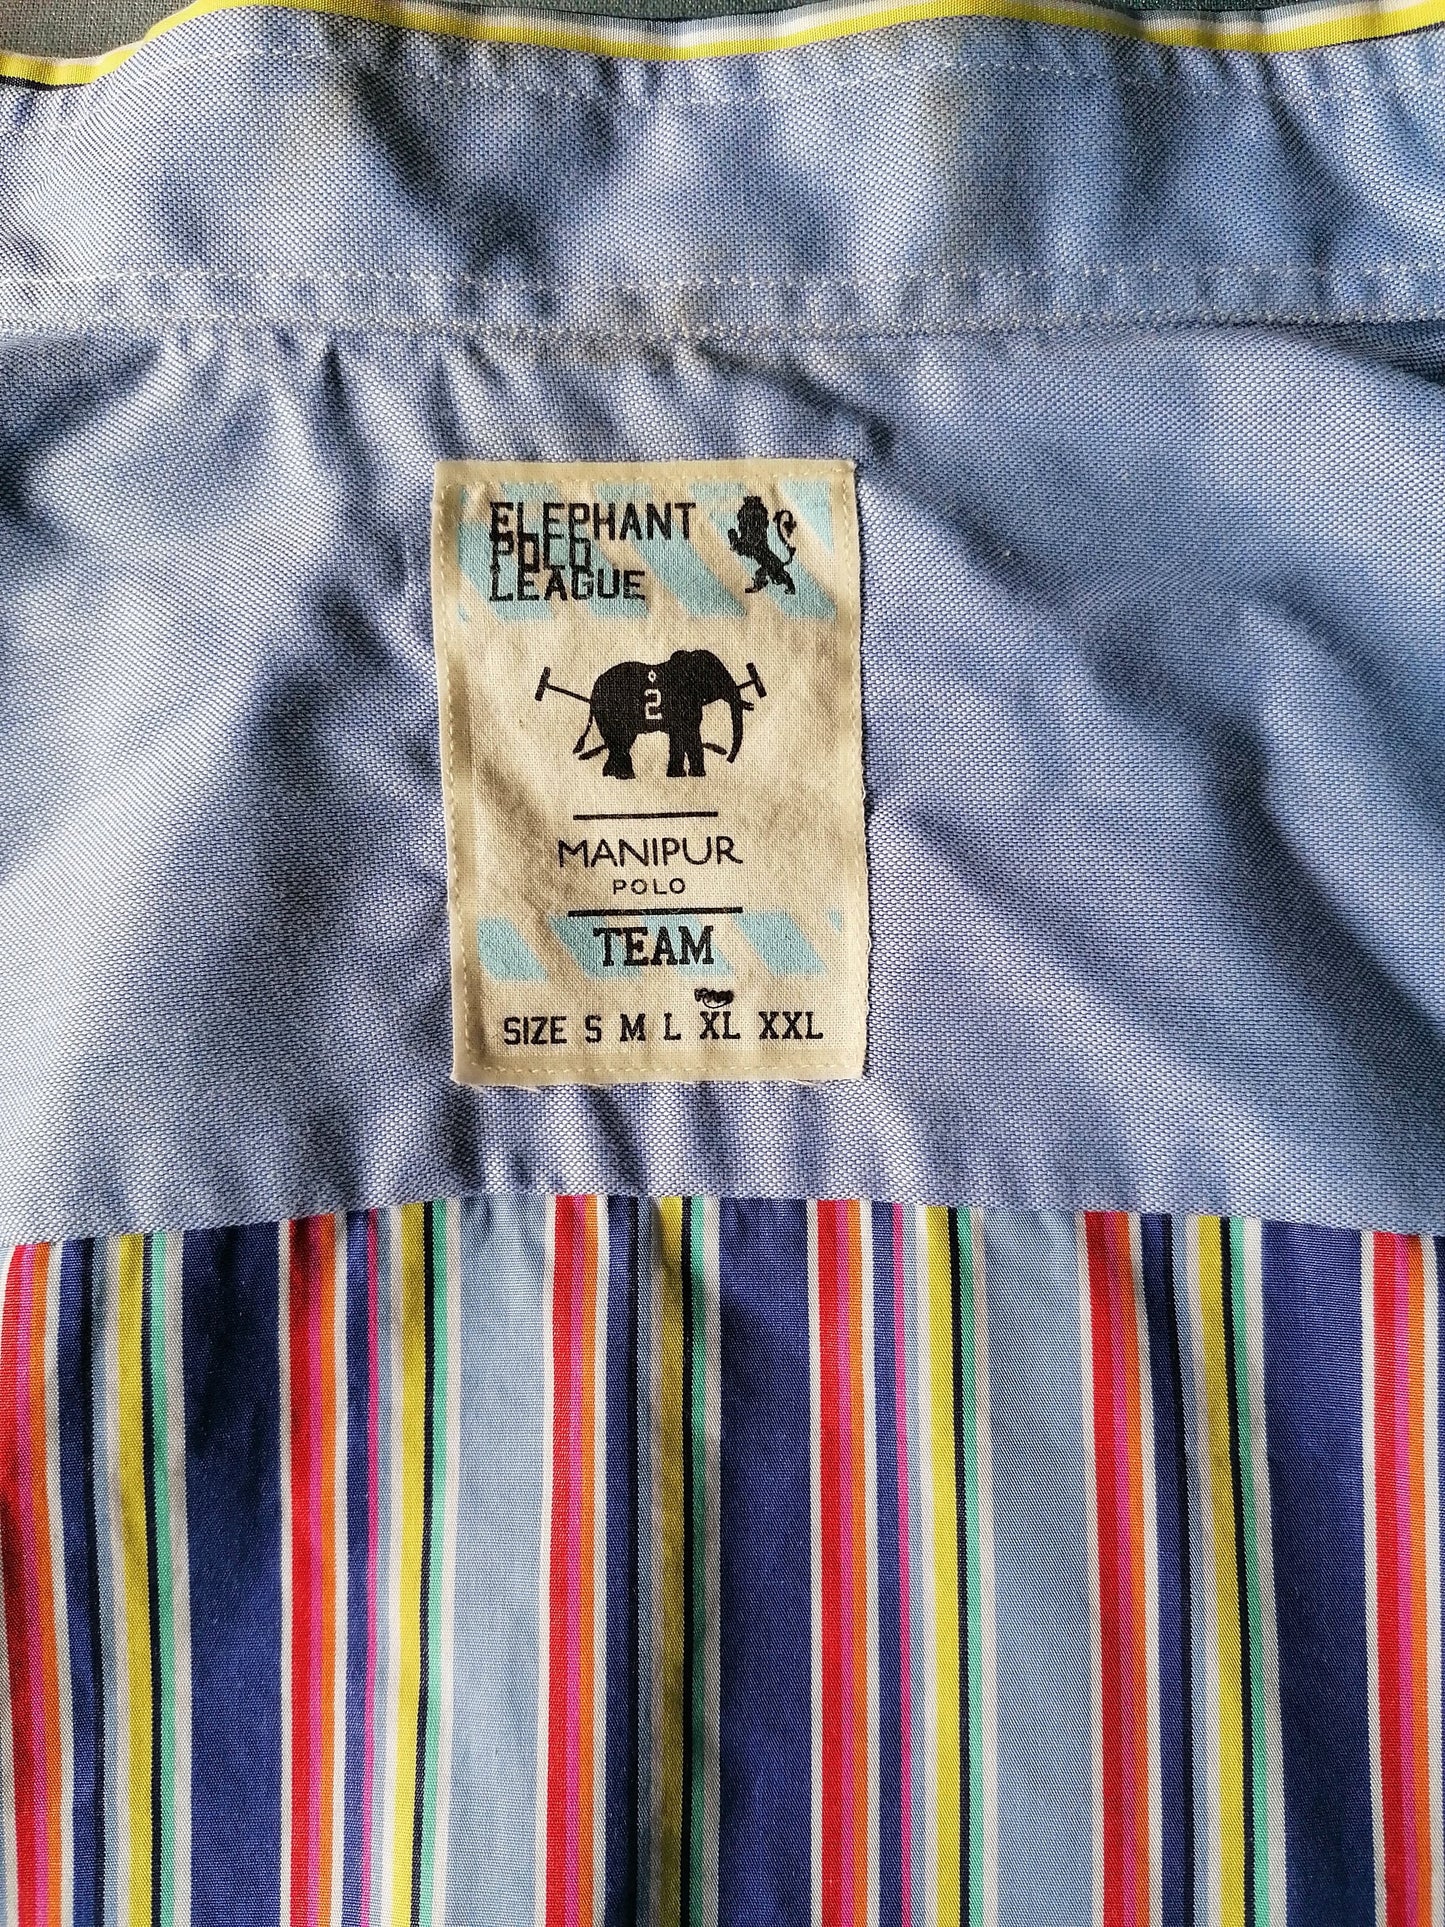 Elephant League / Manipur overhemd. Gekleurd gestreept. Maat XL